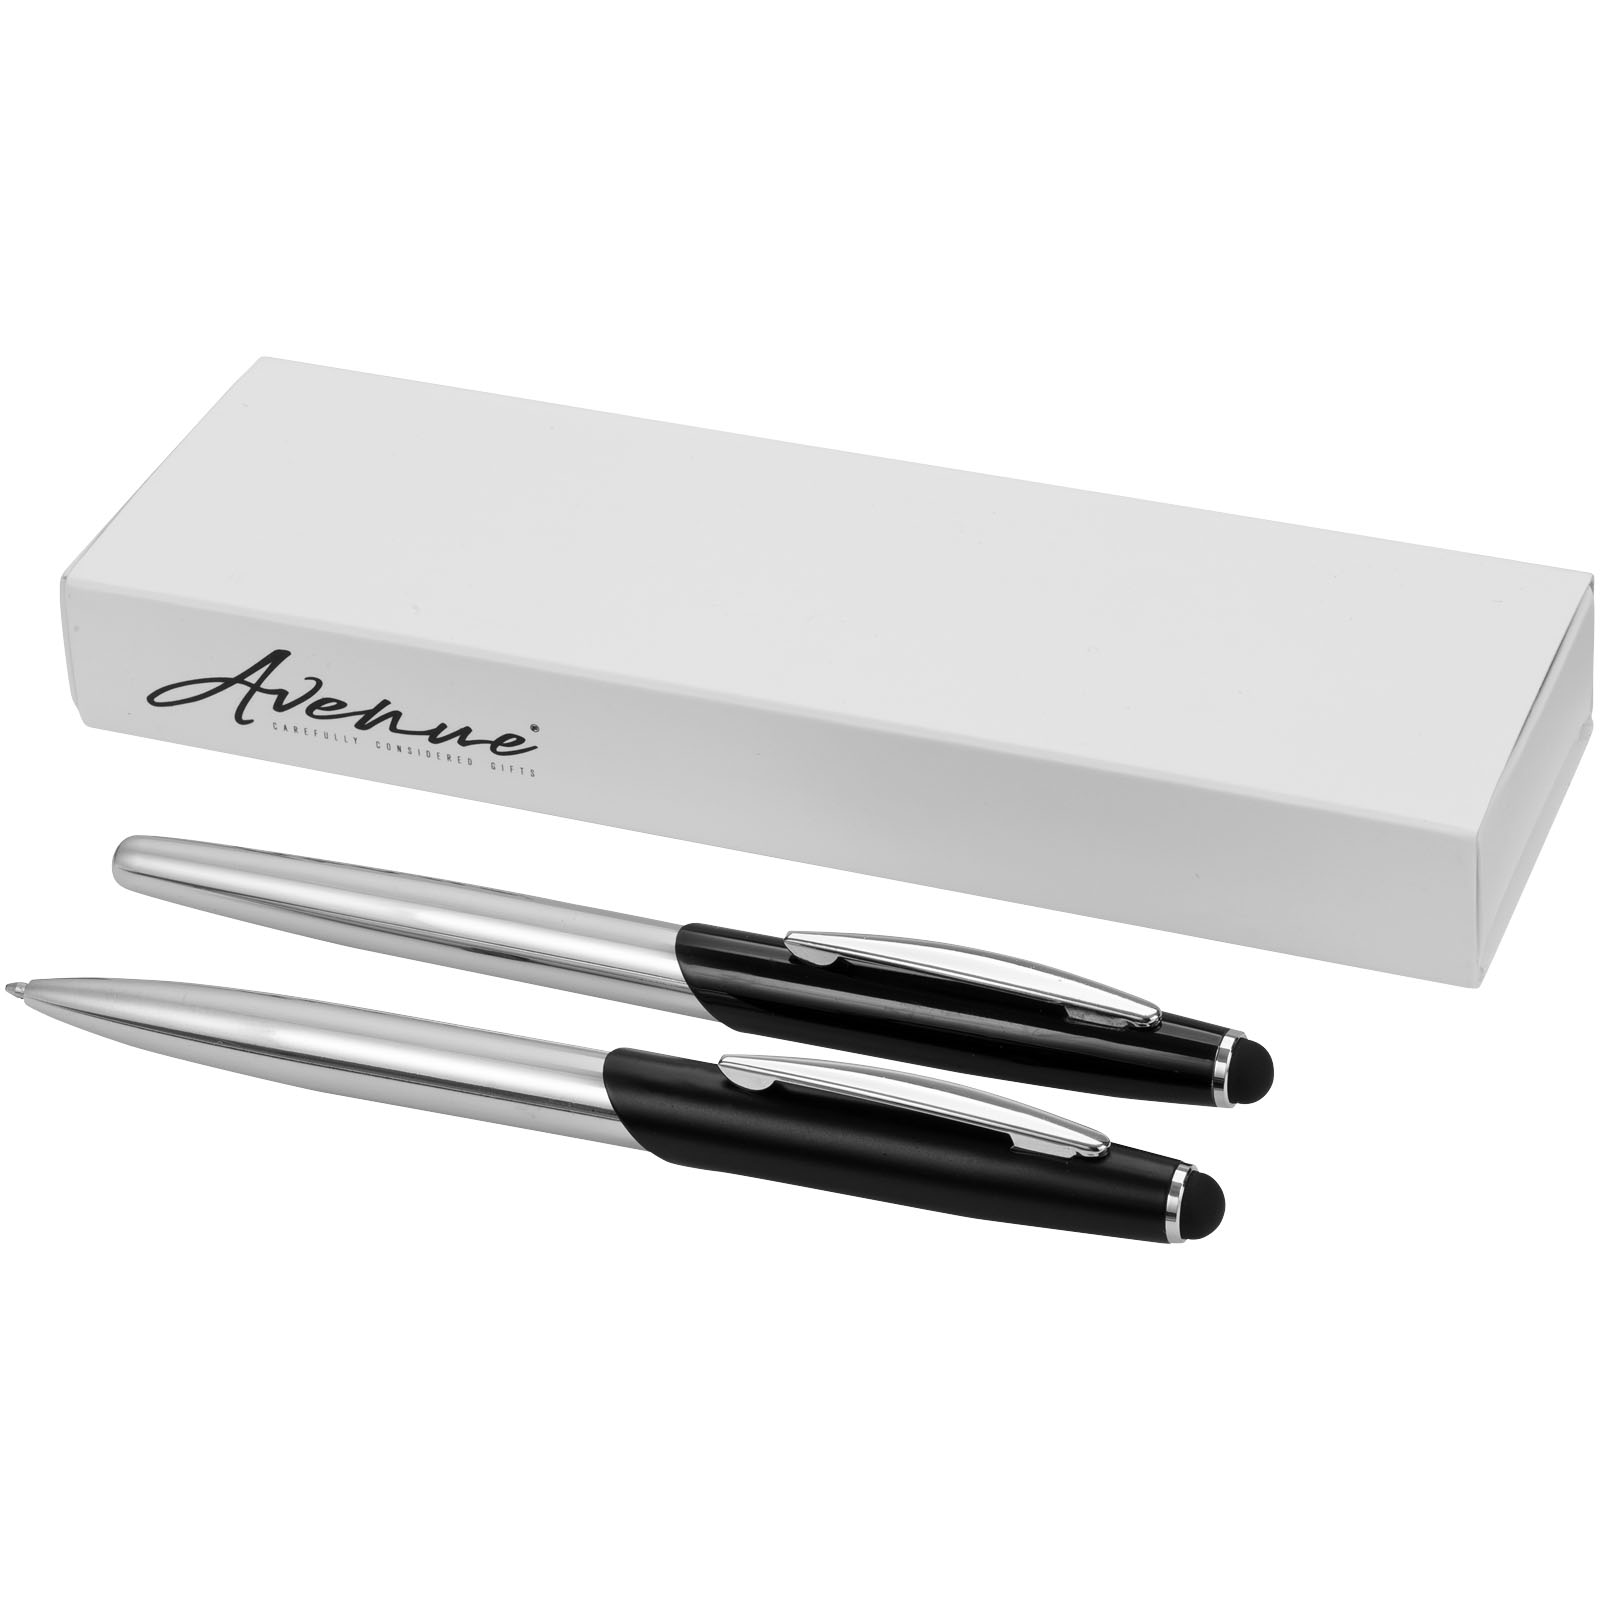 Ballpoint Pens - Geneva stylus ballpoint pen and rollerball pen set